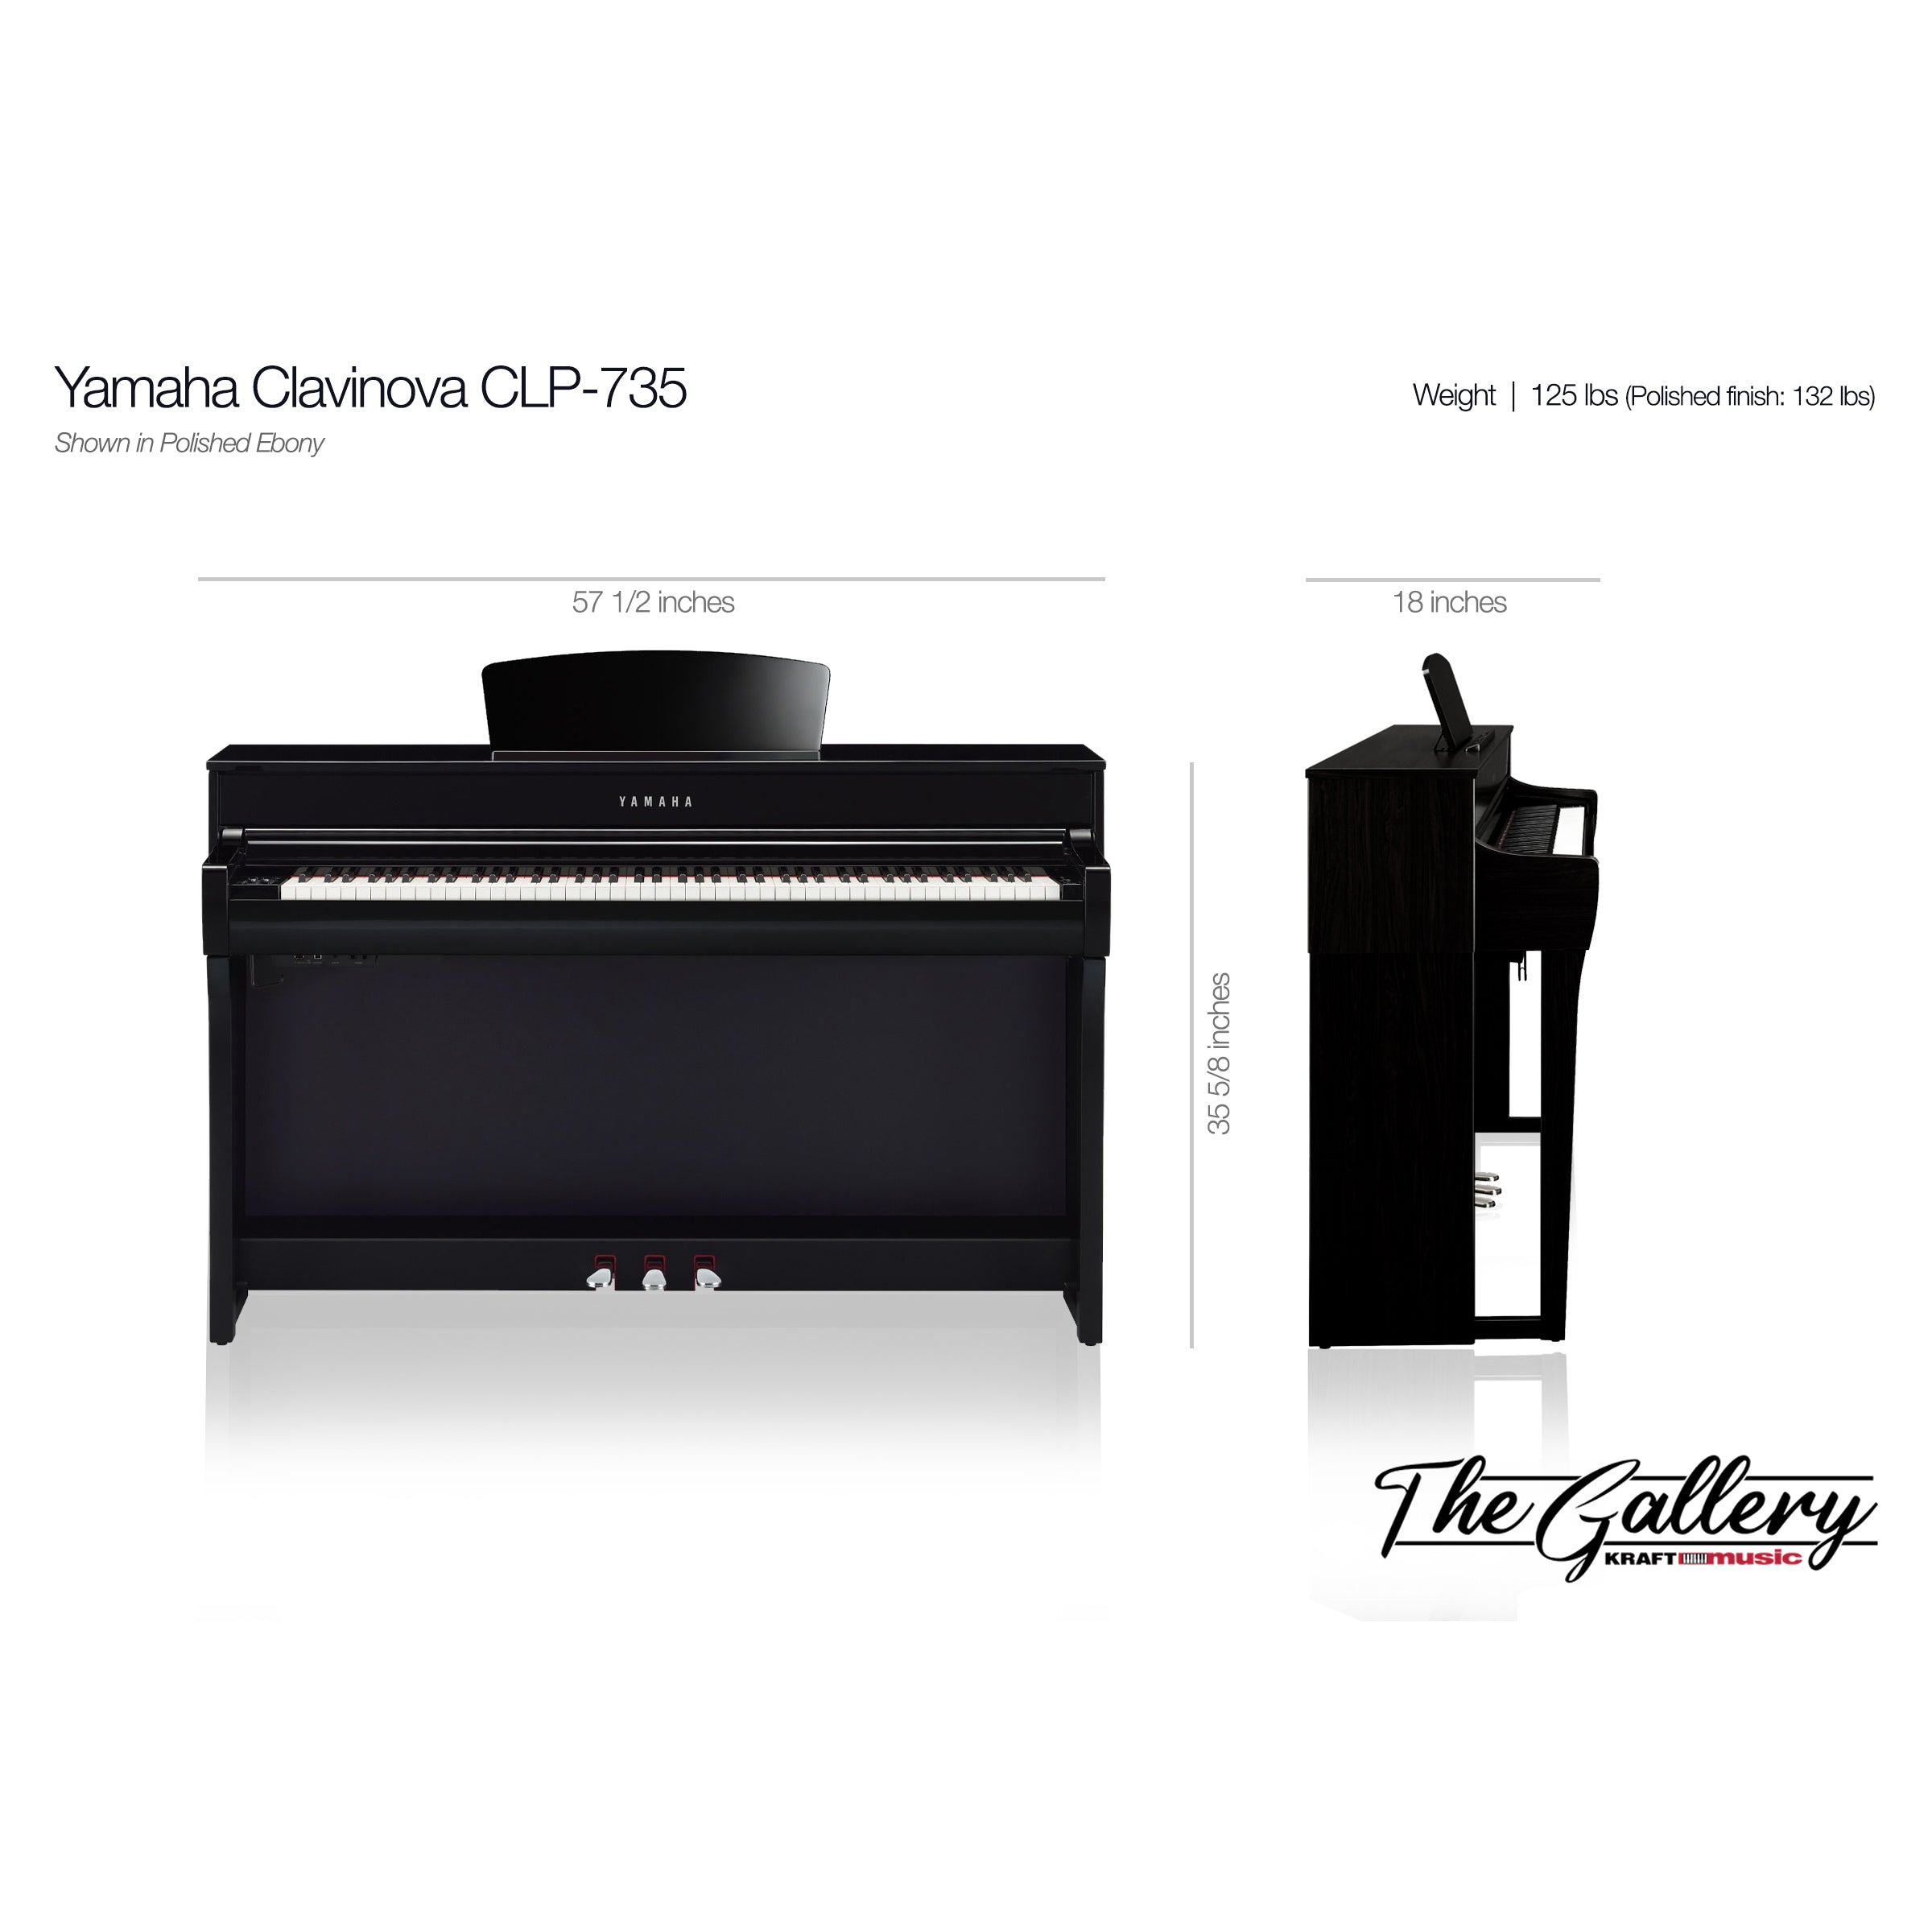 Yamaha Clavinova CLP-735 Digital Piano - Dimensions